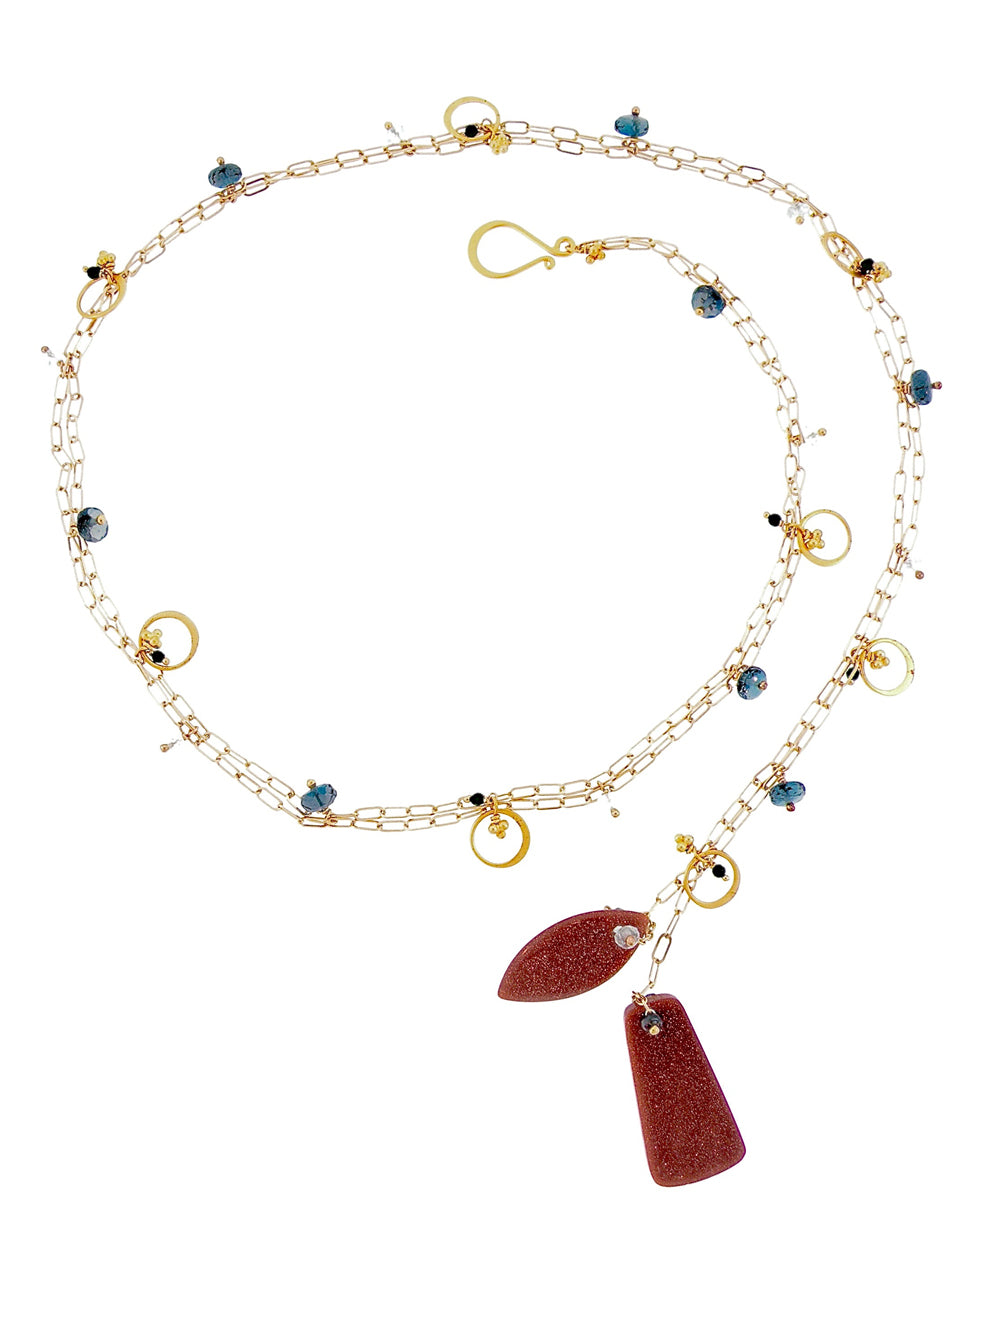 Pleiades Gracing The Midnight Sky Necklace - Dana Busch Designs 